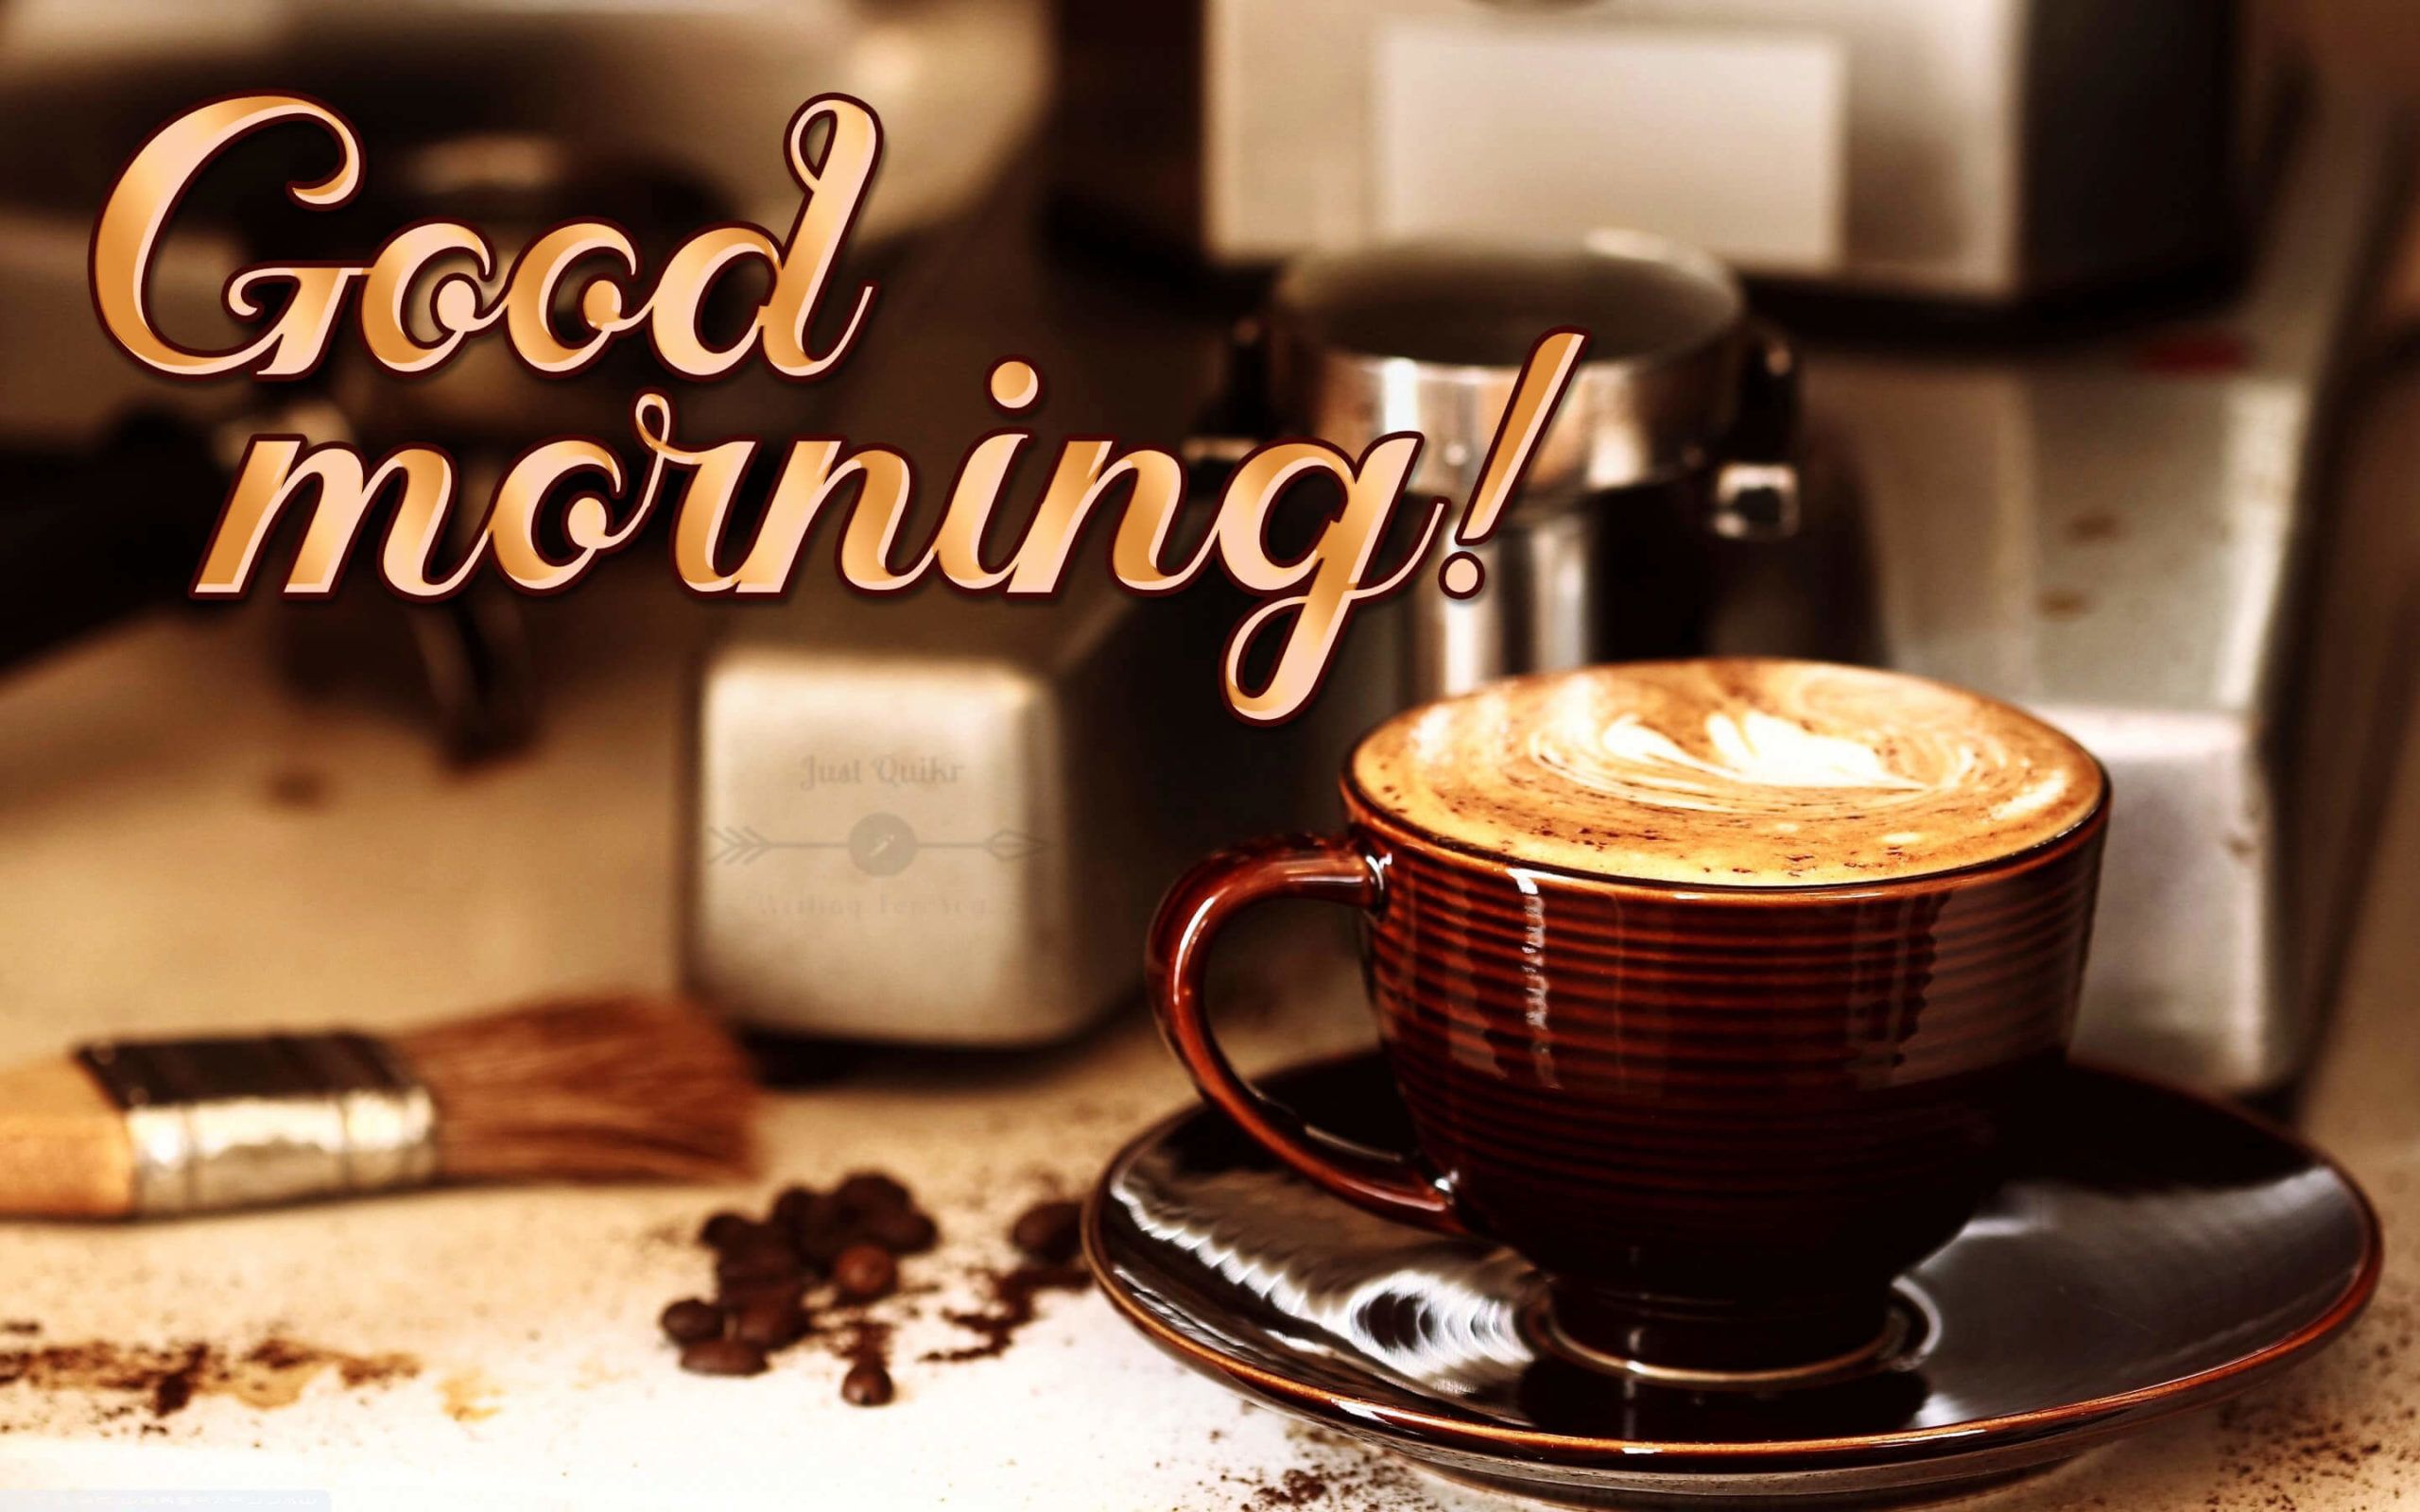 Good Morning Coffee Pics Image. J u s t q u i k r. c o m